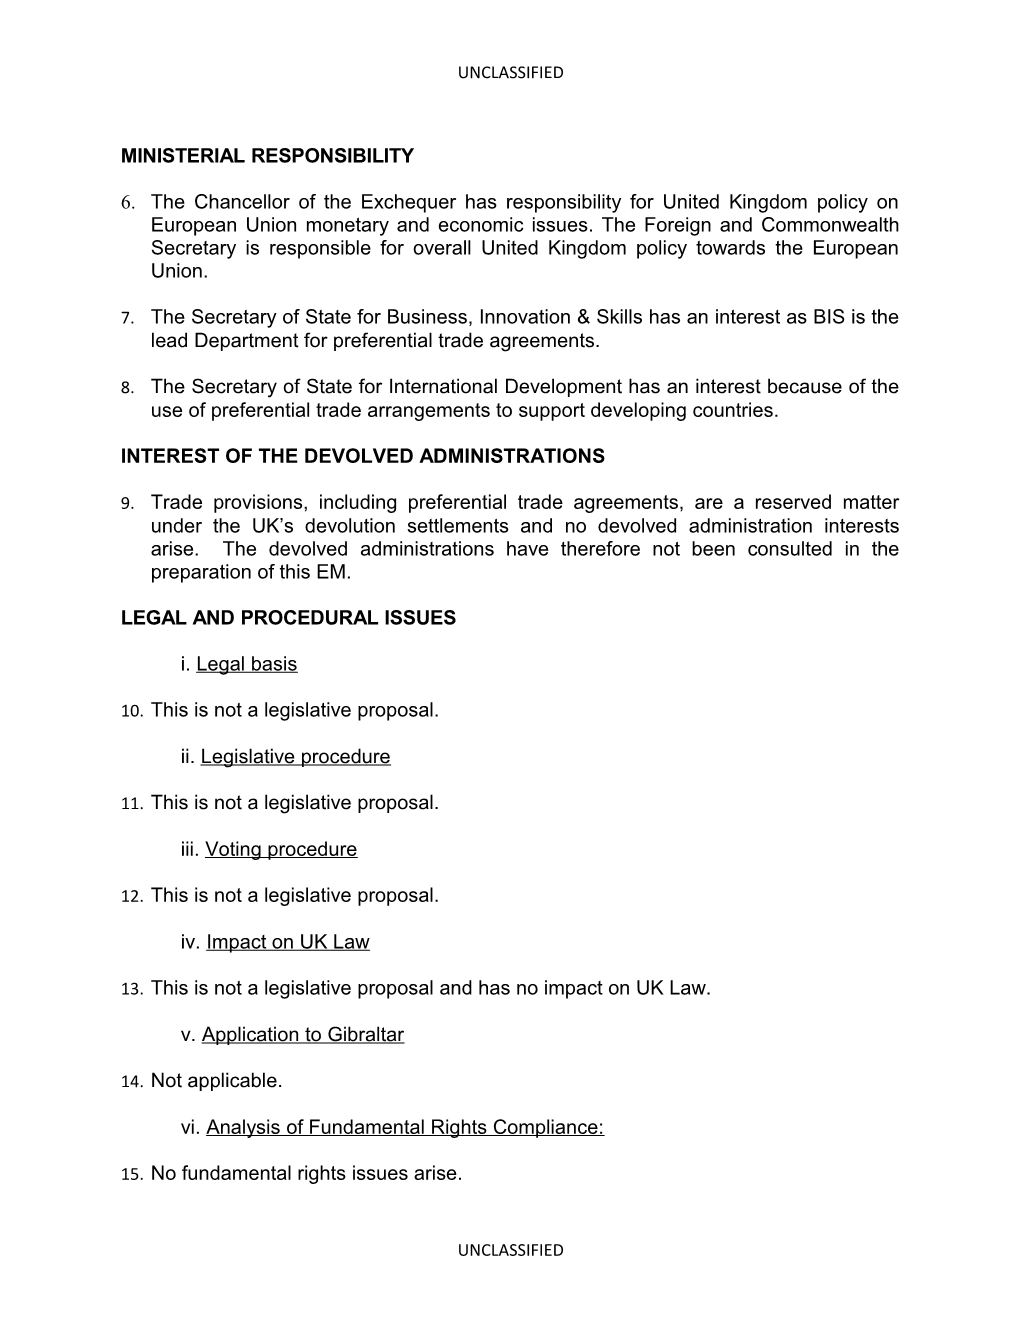 Standard Form of Explanatory Memorandum for European Union Legislation and Documents